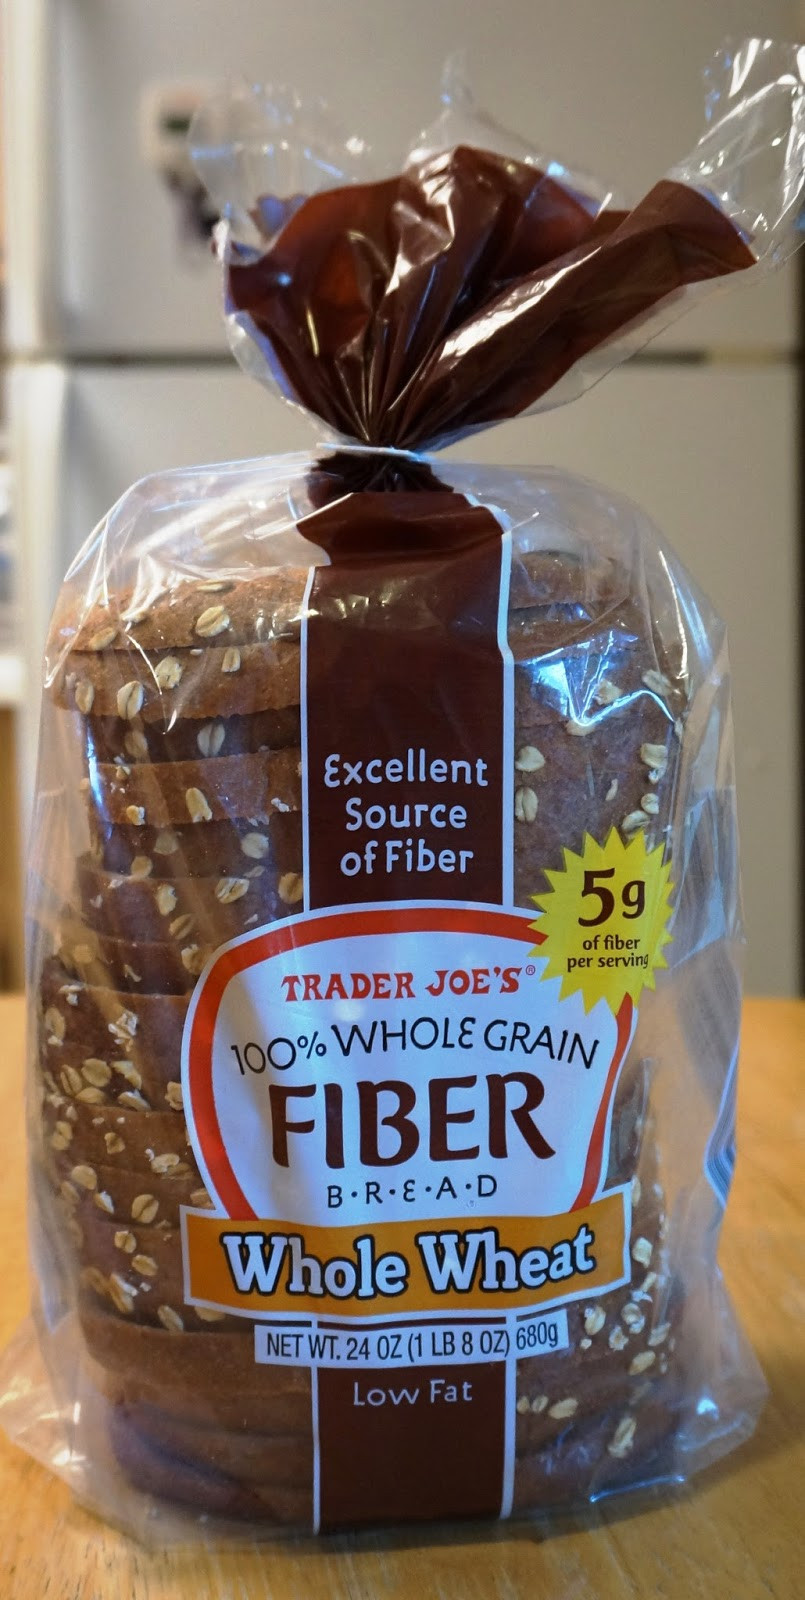 Fiber In Whole Grain Bread
 Exploring Trader Joe s Trader Joe s Whole Grain